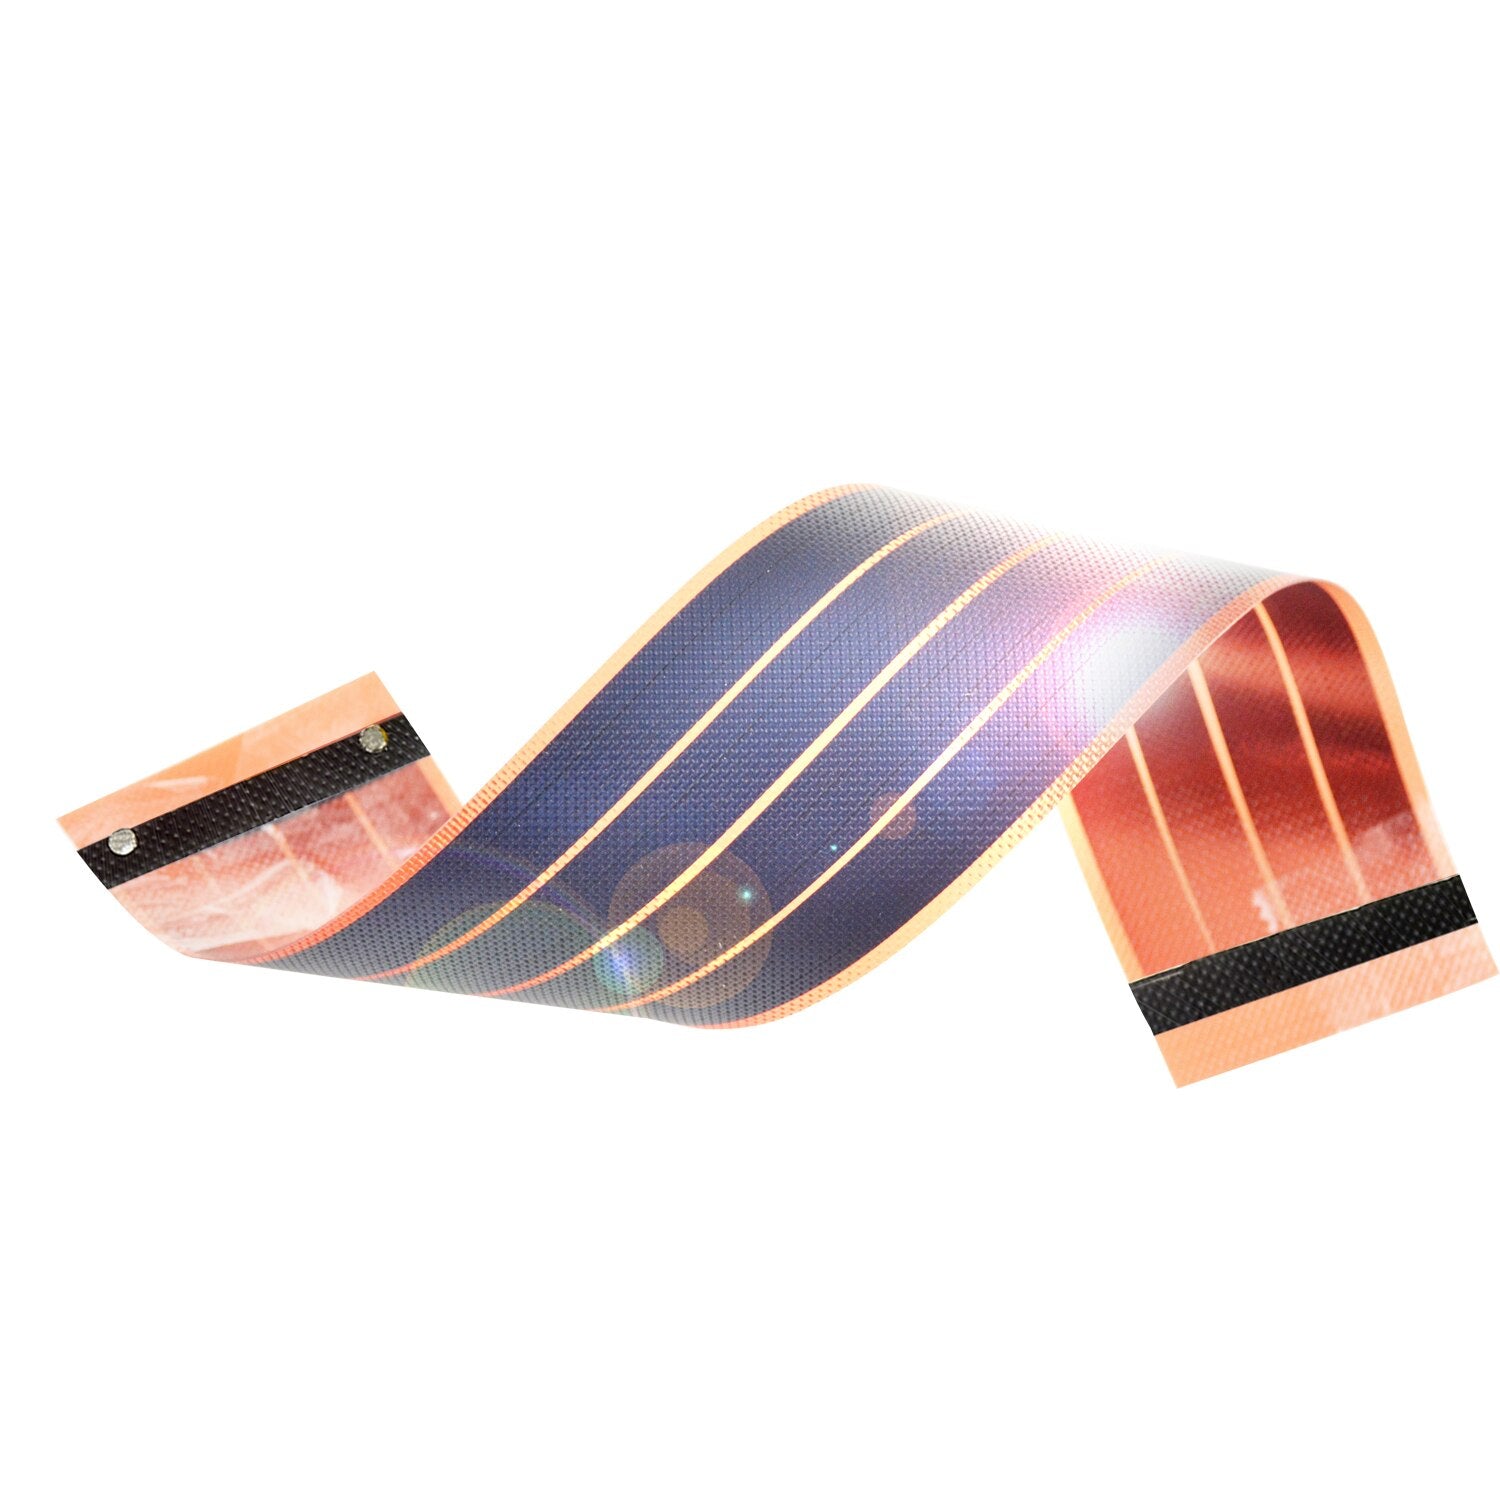 Thin Film Solar Panel Cell flexible Battery Ogniwa Fotowoltaiczne flex folding solar panneau solaire zonnepaneel 1.2W 0.2A